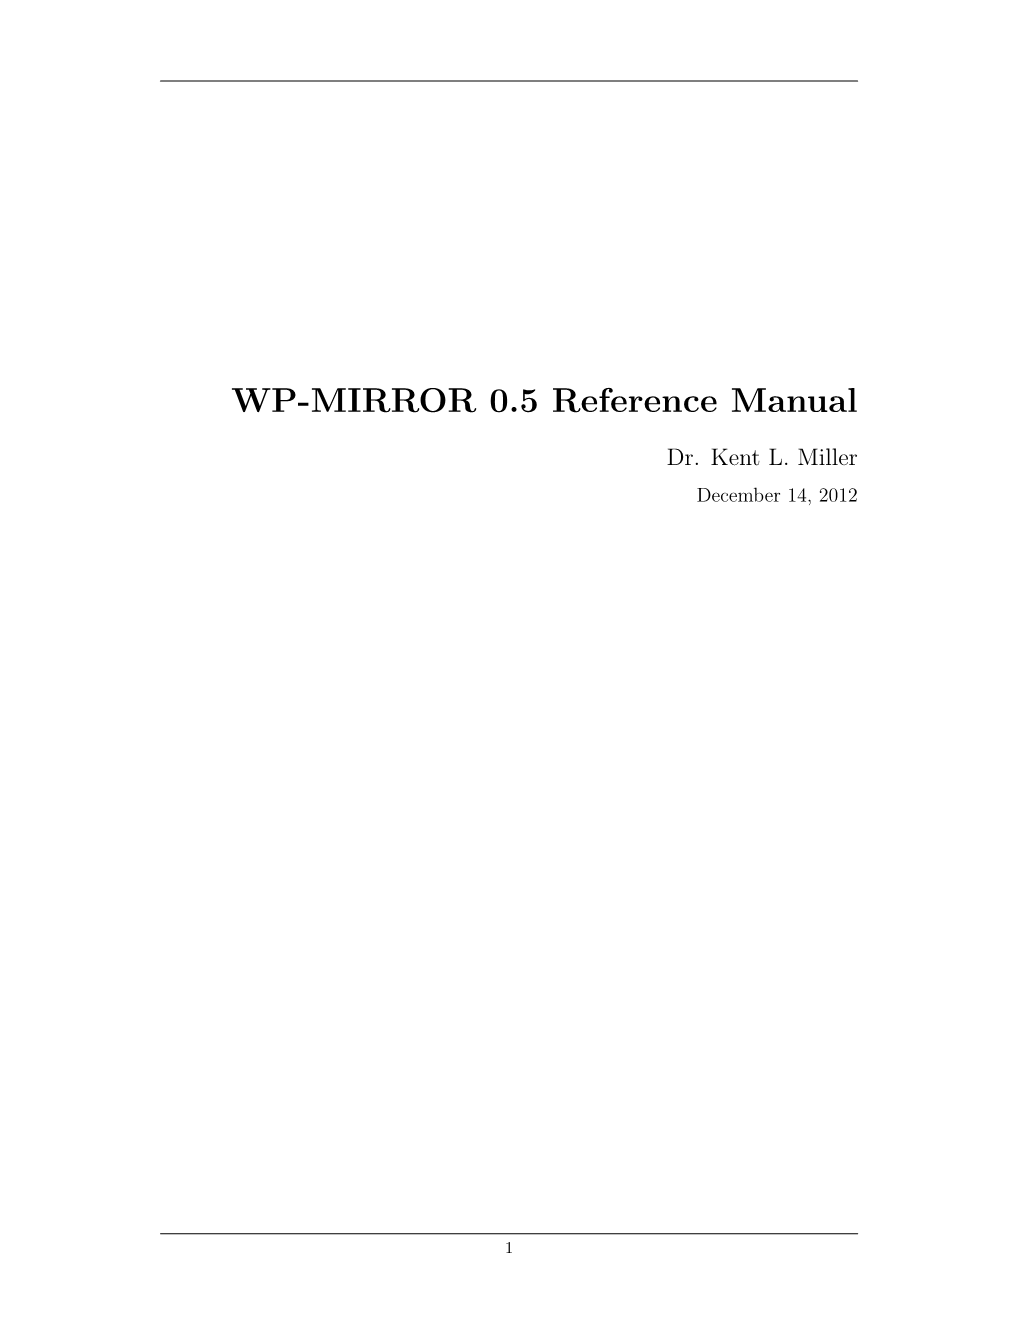 WP-MIRROR 0.5 Reference Manual